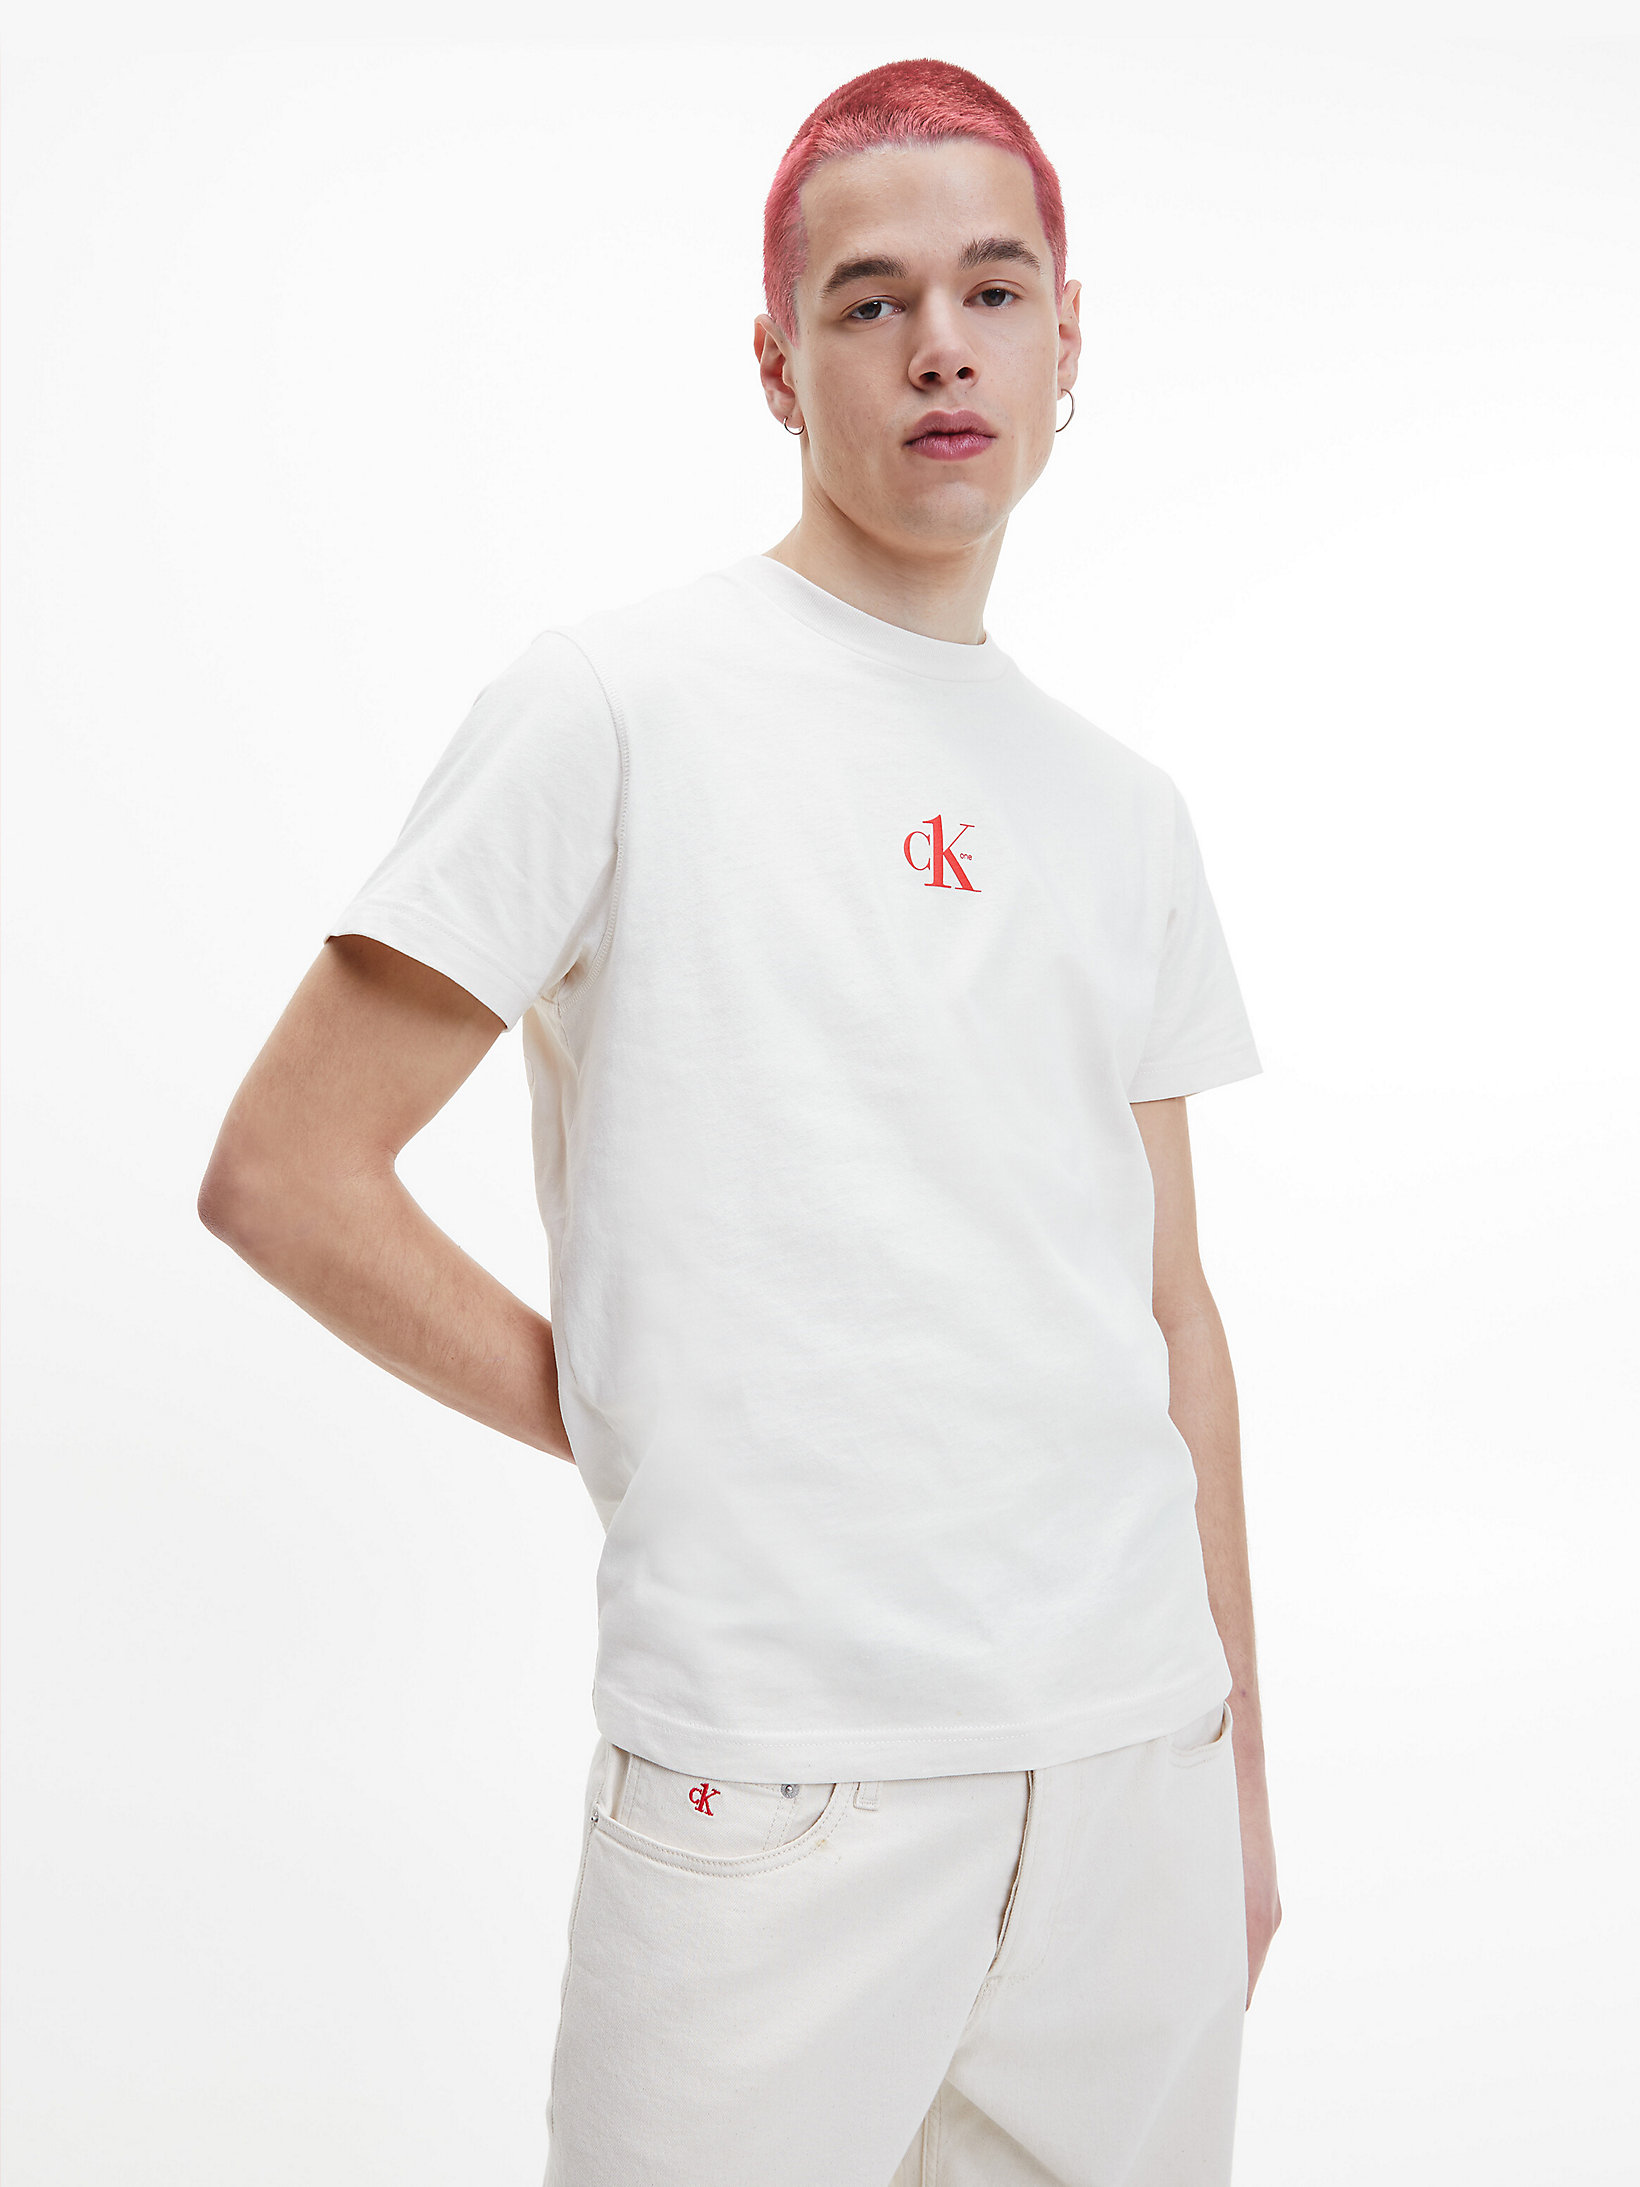 Crescent Moon Unisex Recycled Cotton T-Shirt - CK One undefined unisex Calvin Klein